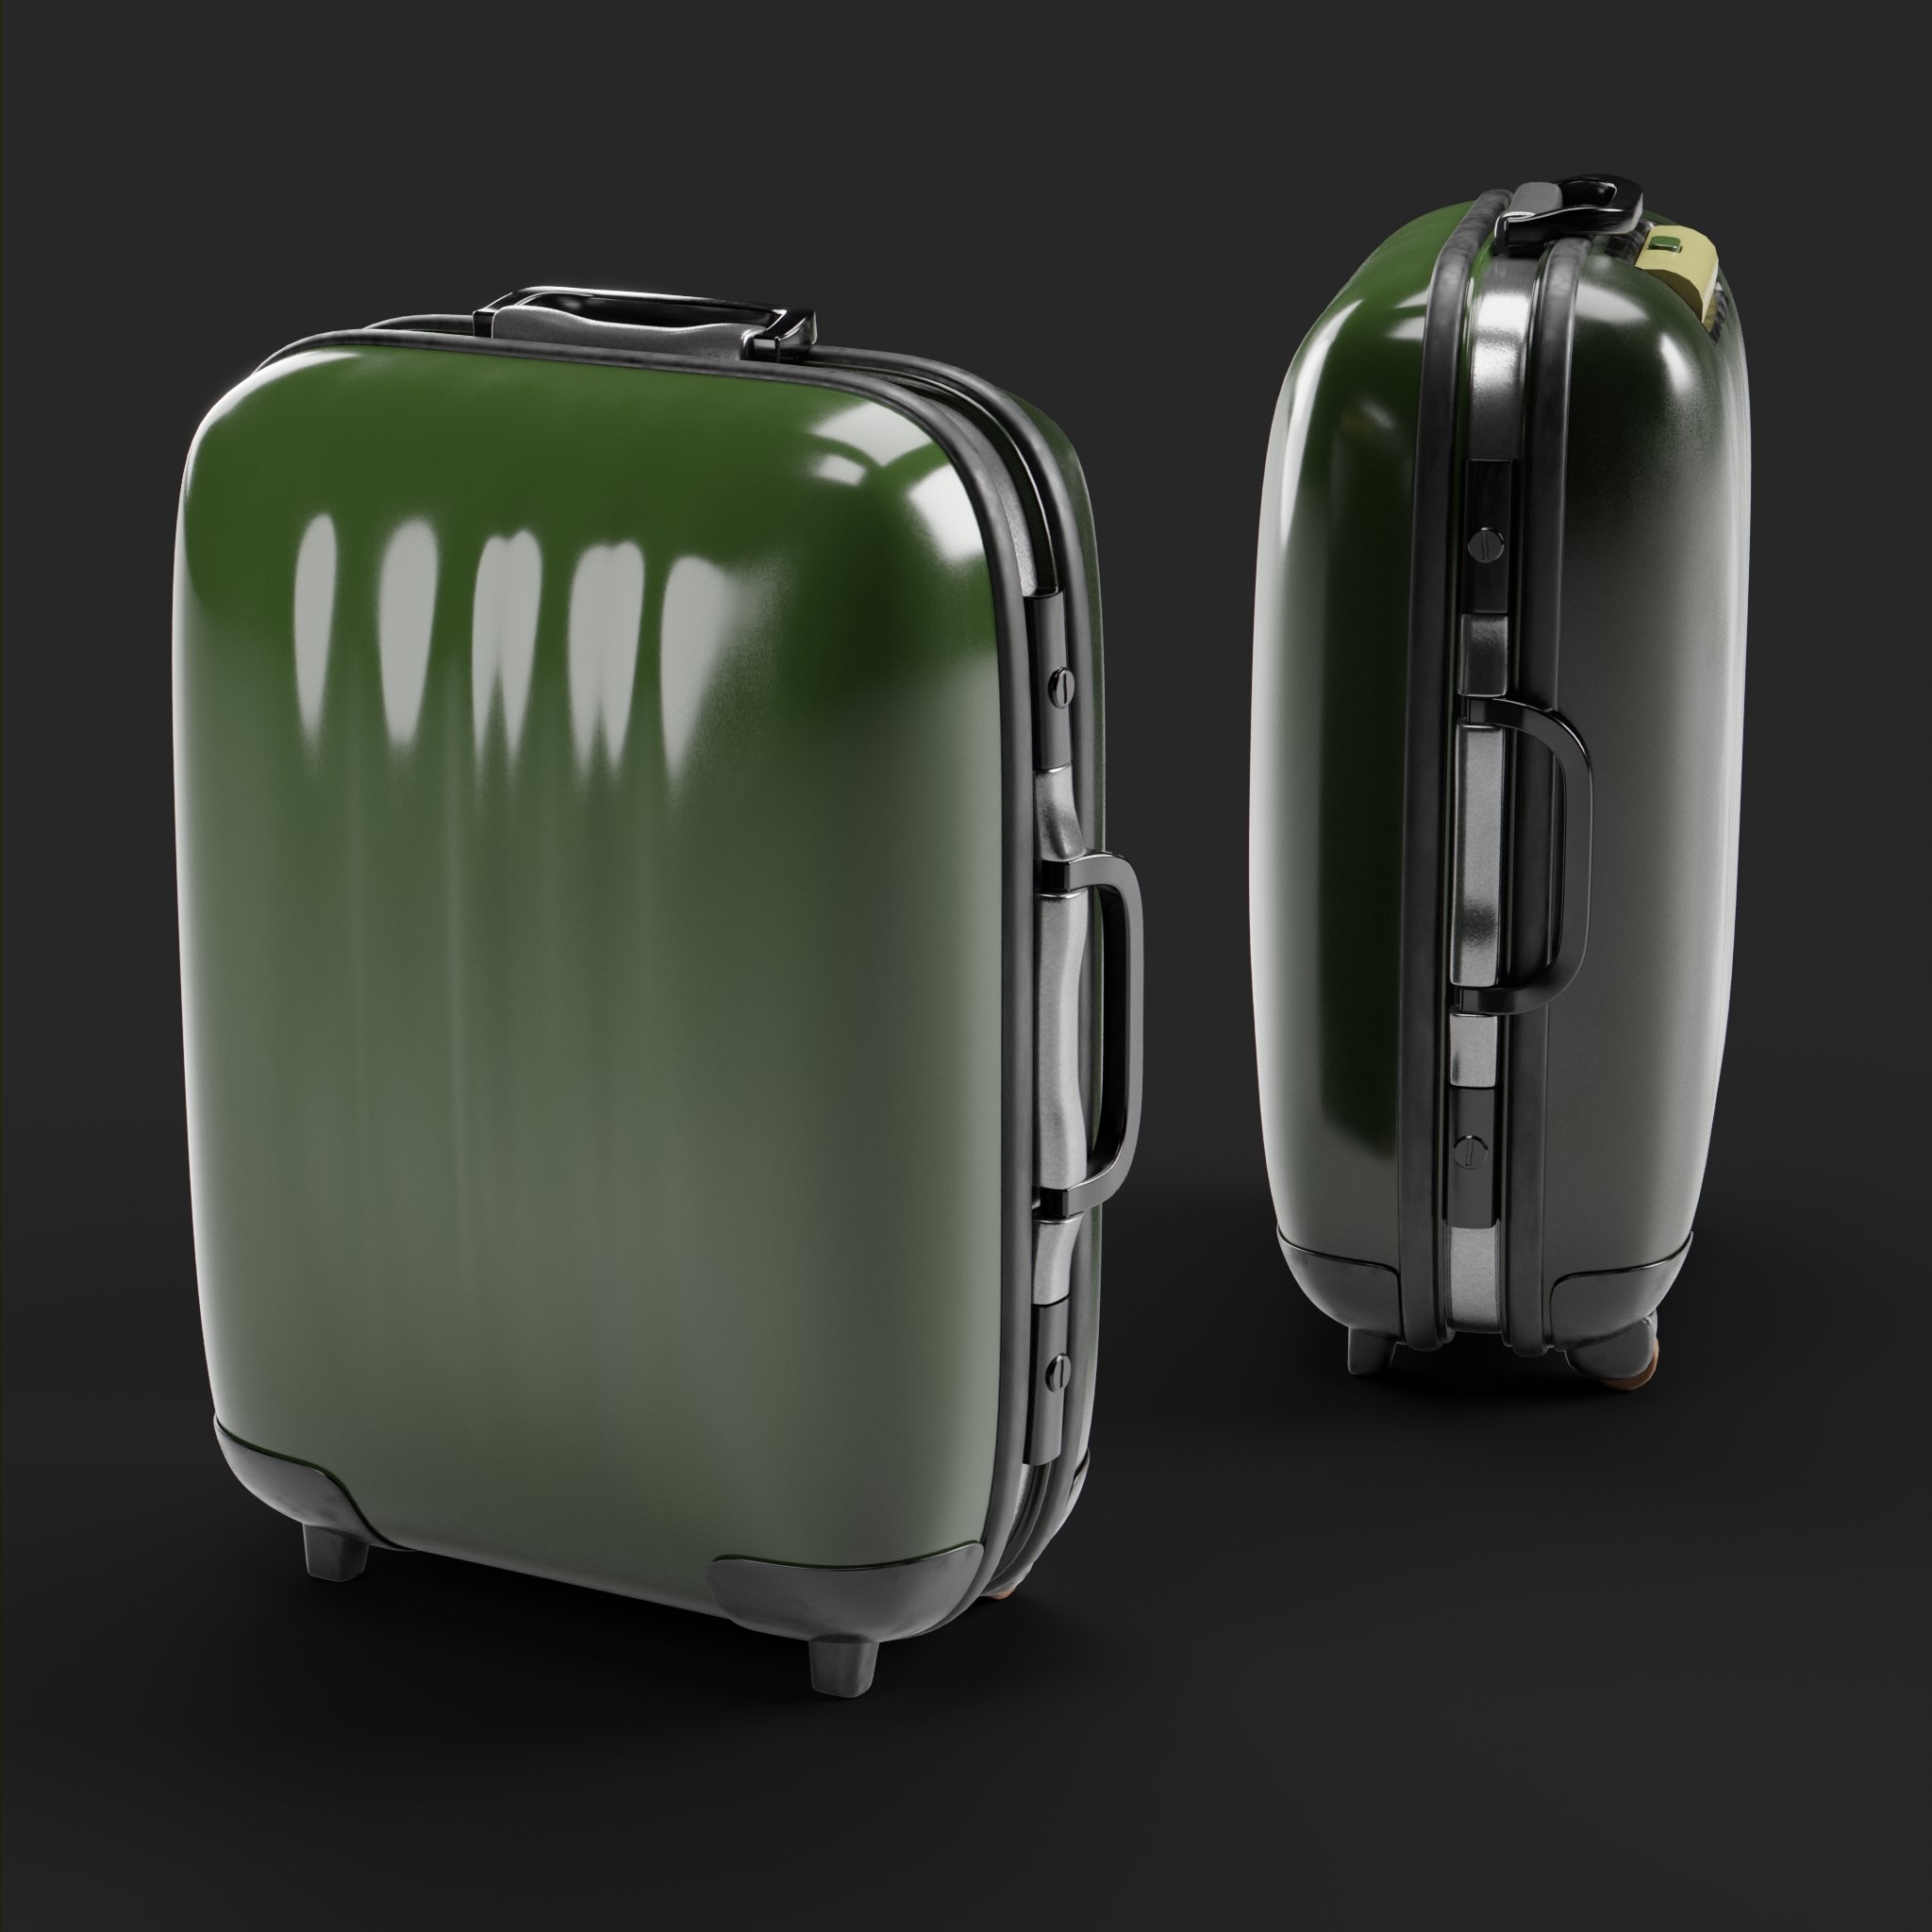 Hyper-realistic bag 3D model Luggage 